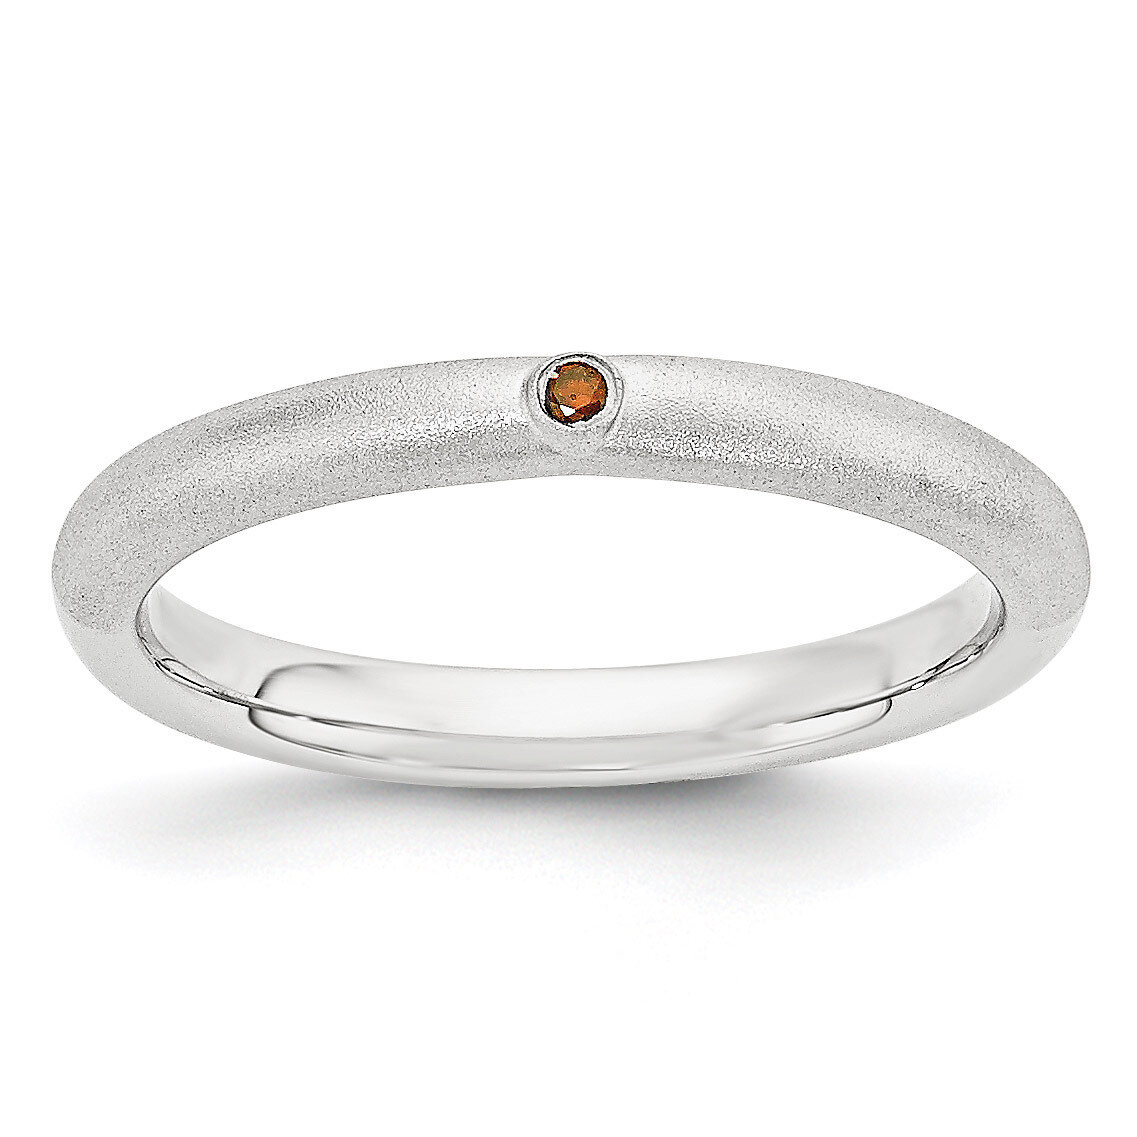 Red Diamond Ring Sterling Silver QSK1871